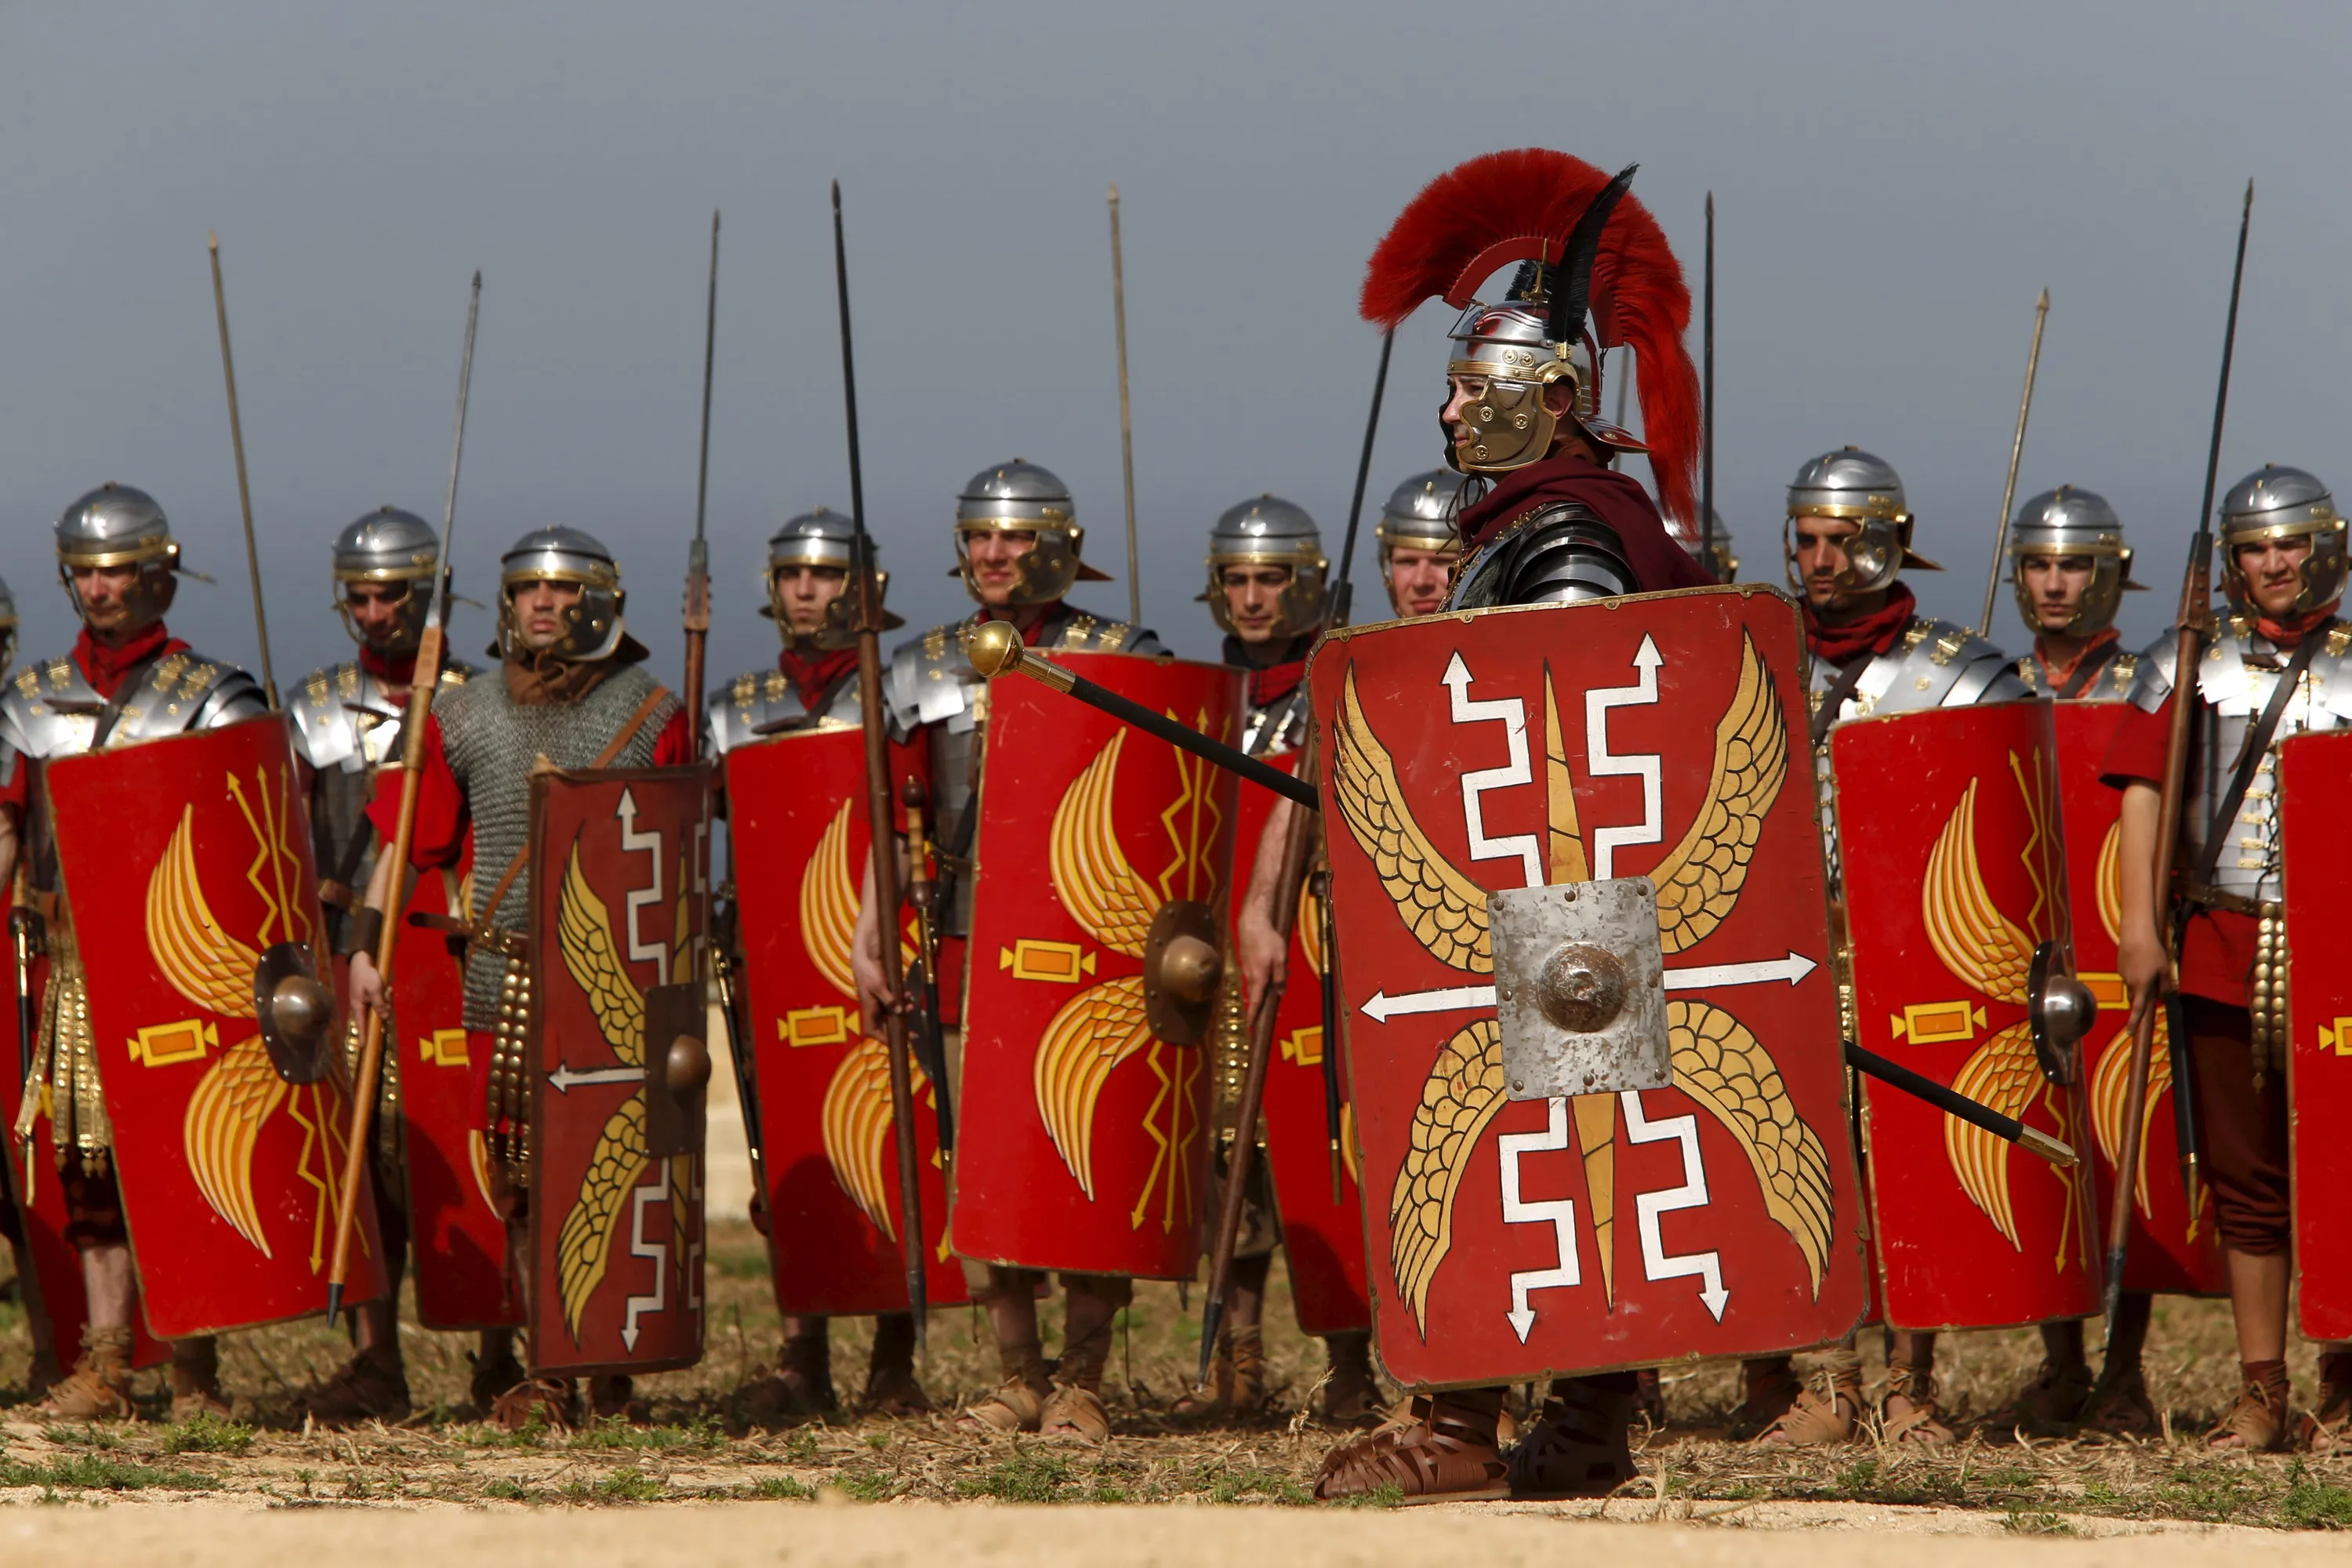 Войско римлян. Римский Легион Центурия. Древний Рим армия Легионы. Римская Империя Римский Легион. Римская Империя армия Легион.